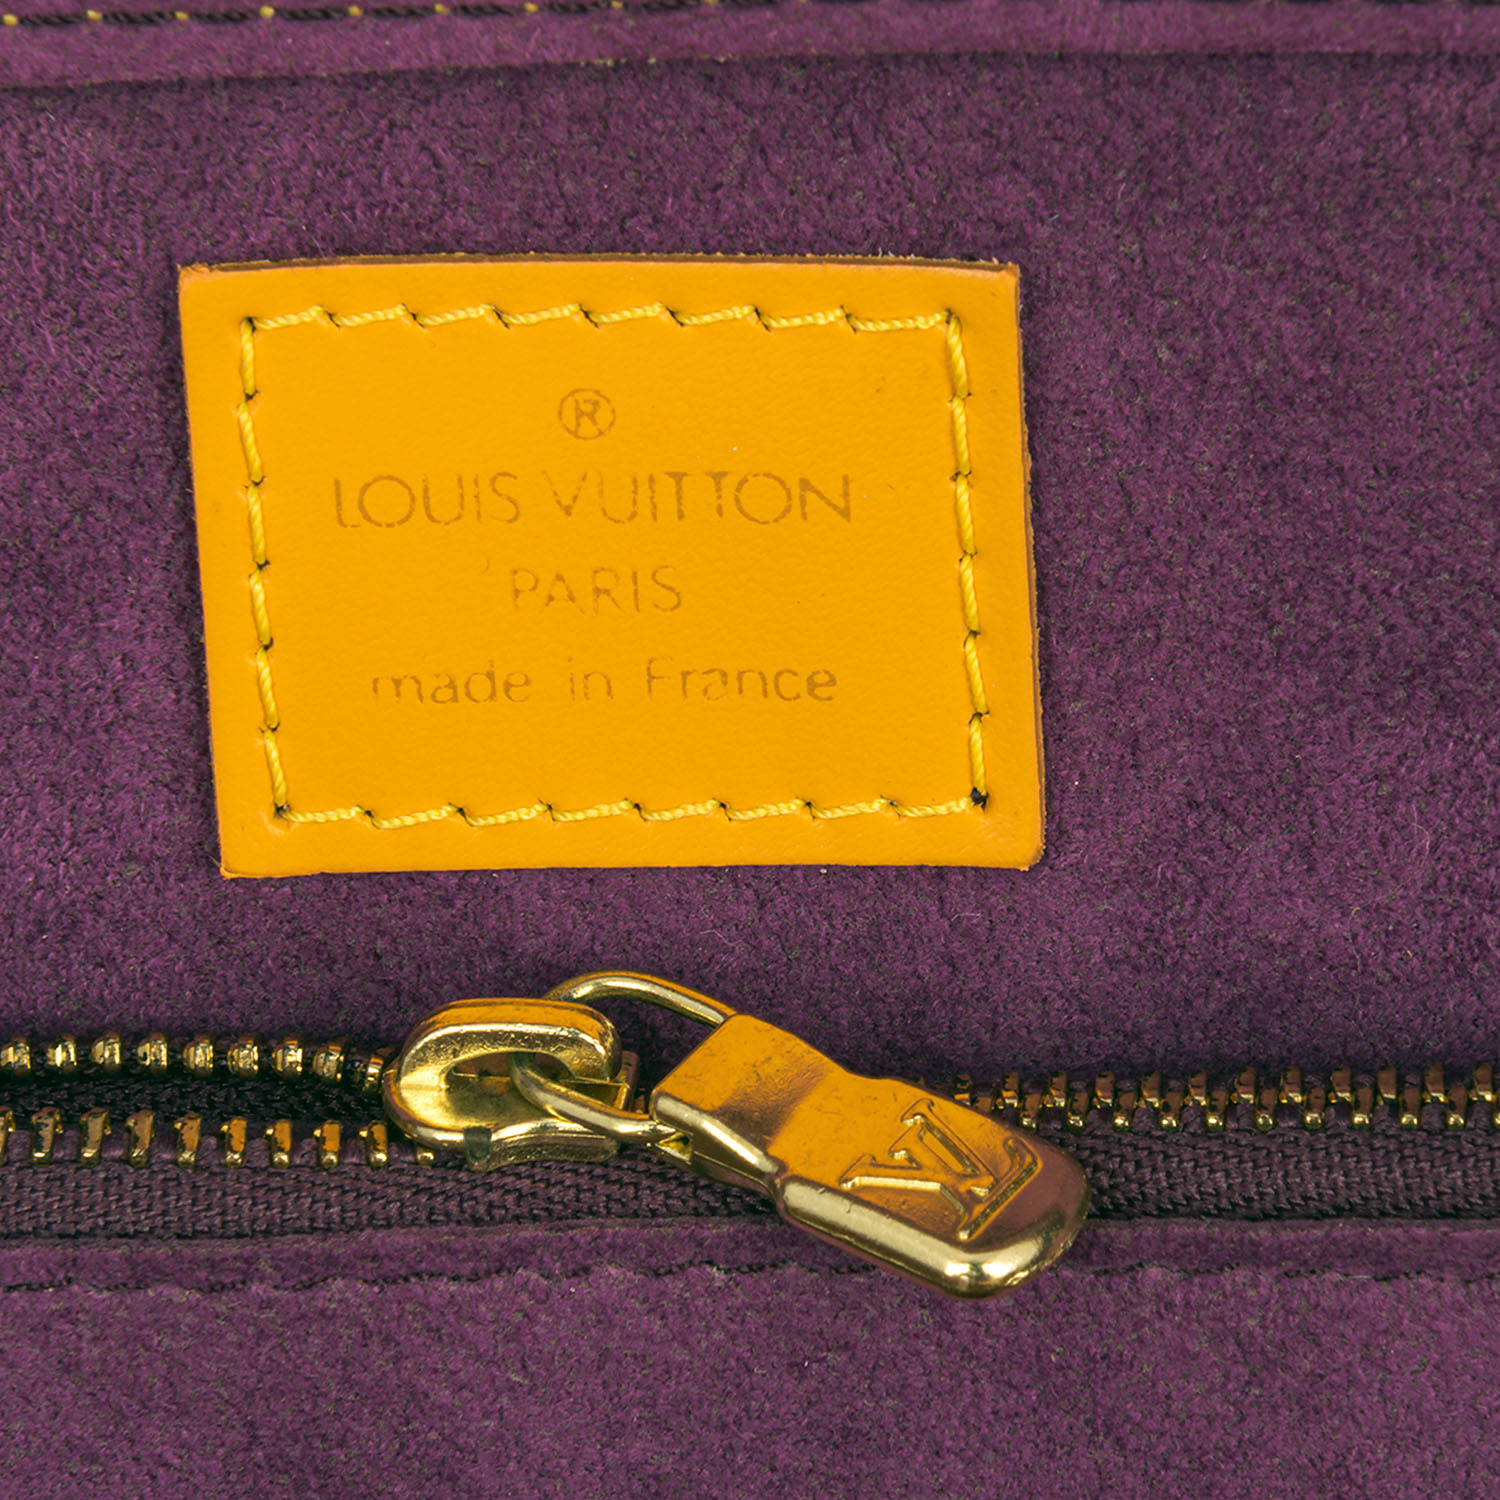 Pre-Loved Louis Vuitton Purple Handbag